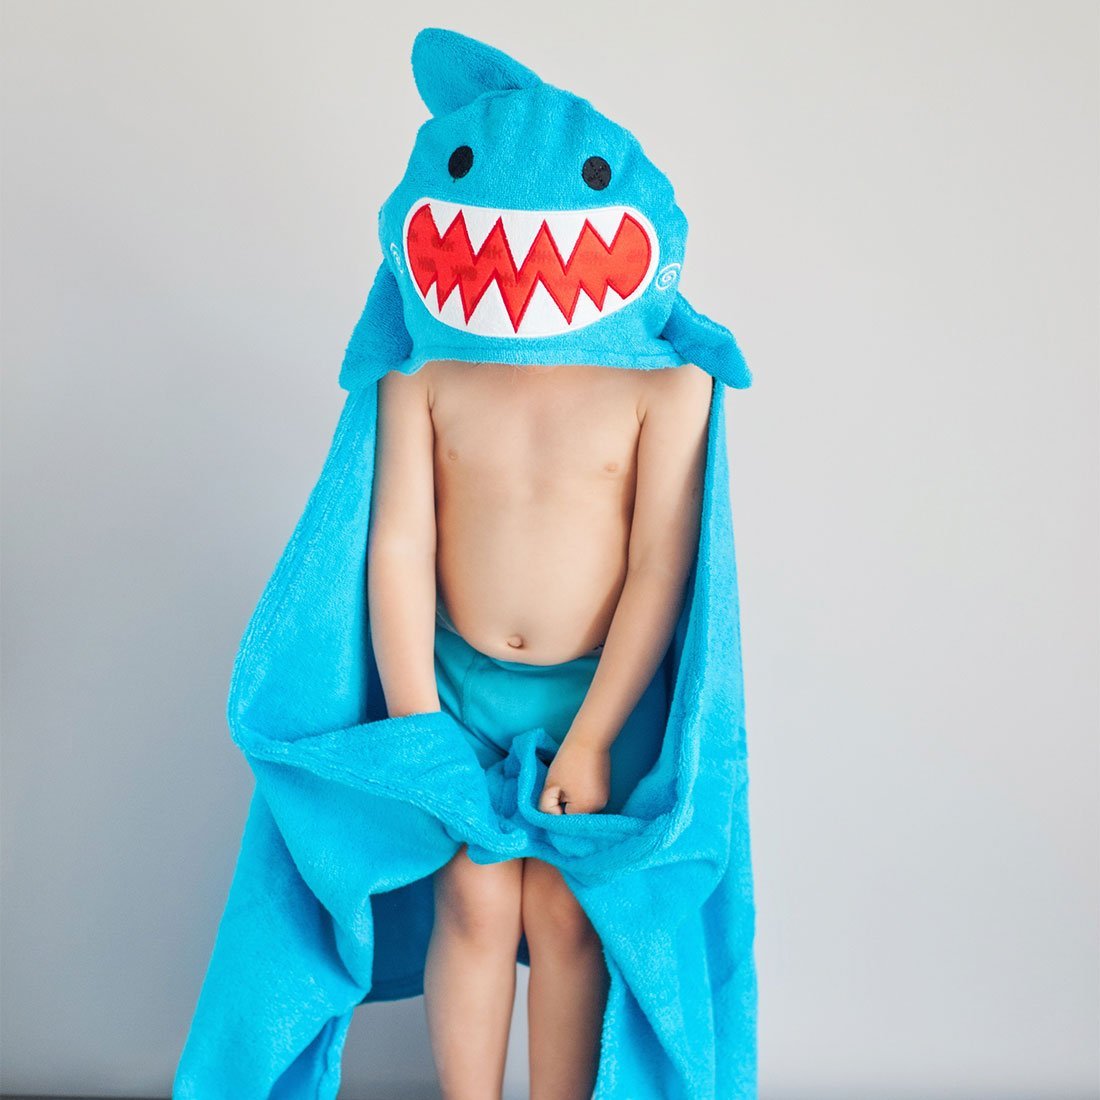 Zoocchini Hooded Towel - Sherman the Shark